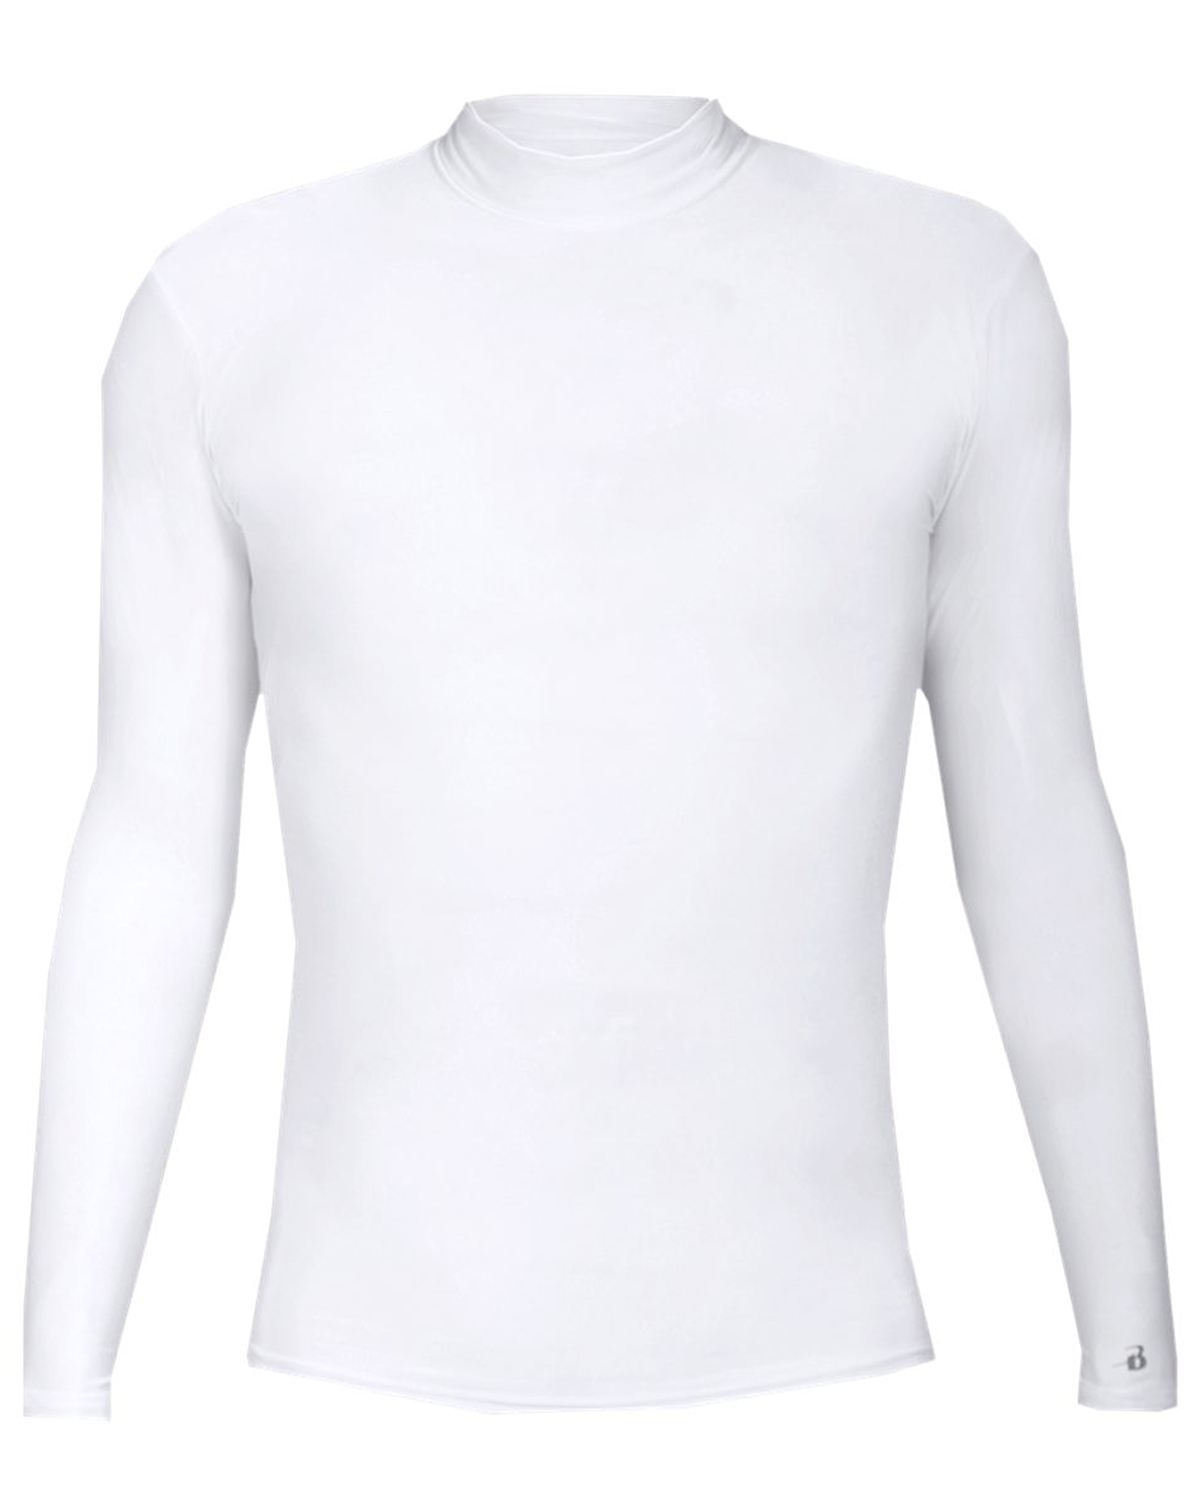 Badger Sport Navy Blue Compression Shirt Long Sleeve Size 2XL